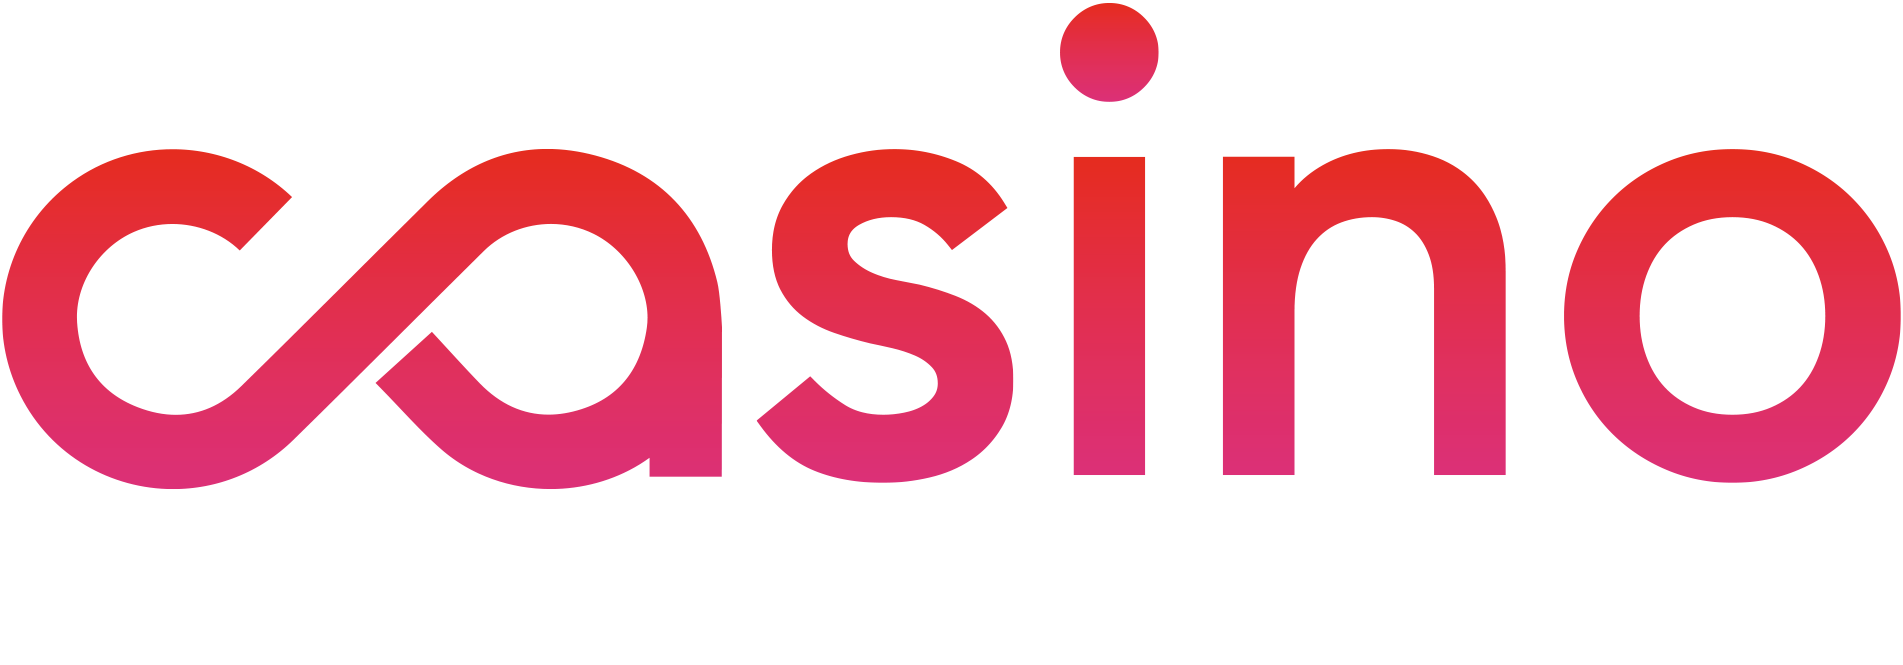 Casino UNLIMITED Logo